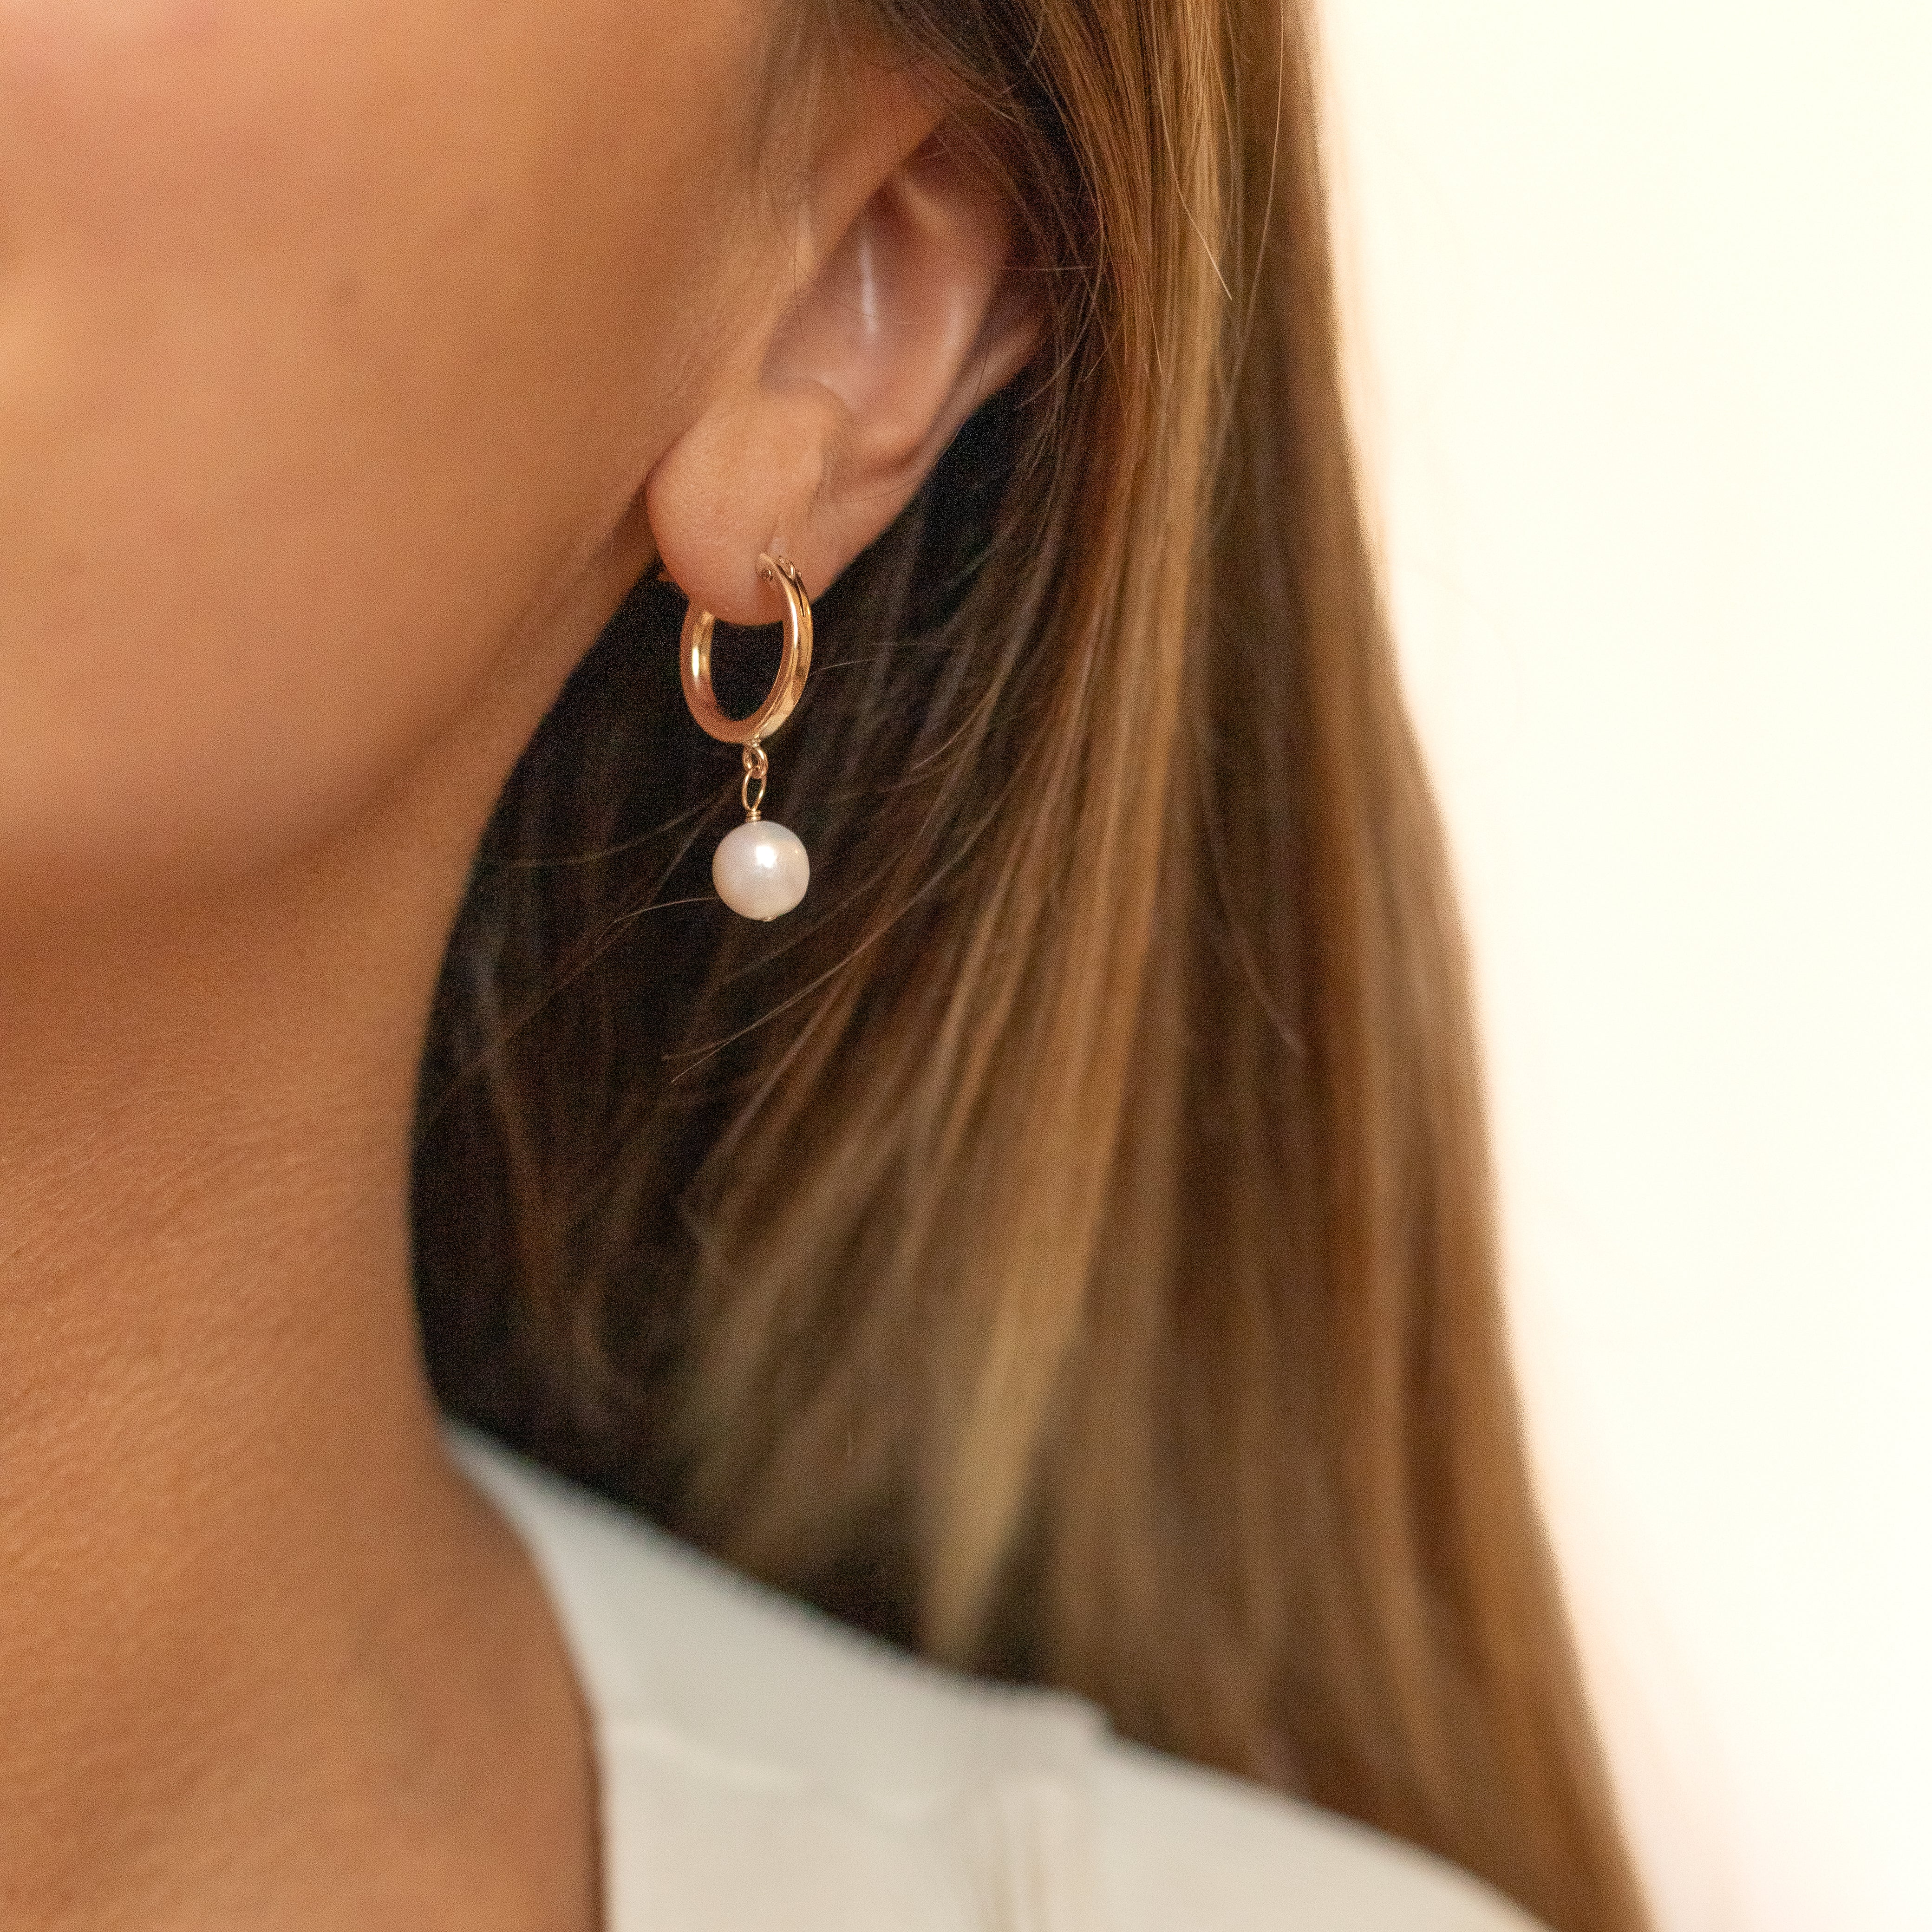 Buy Golden Pearl Drop Hoop Earrings for Women Online in India